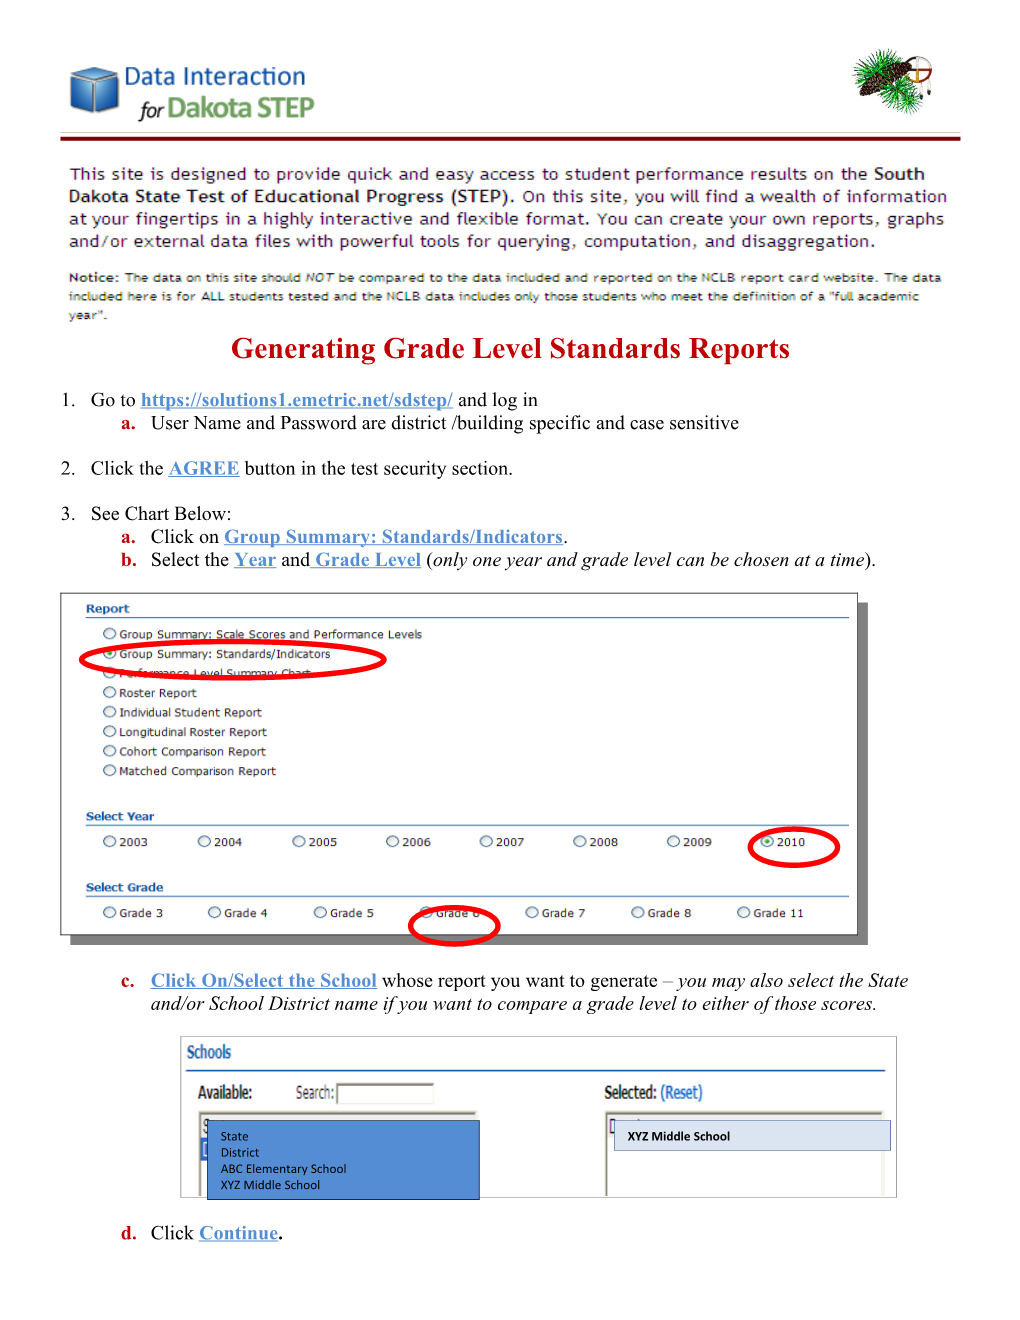 Generating Grade Level Standards Reports